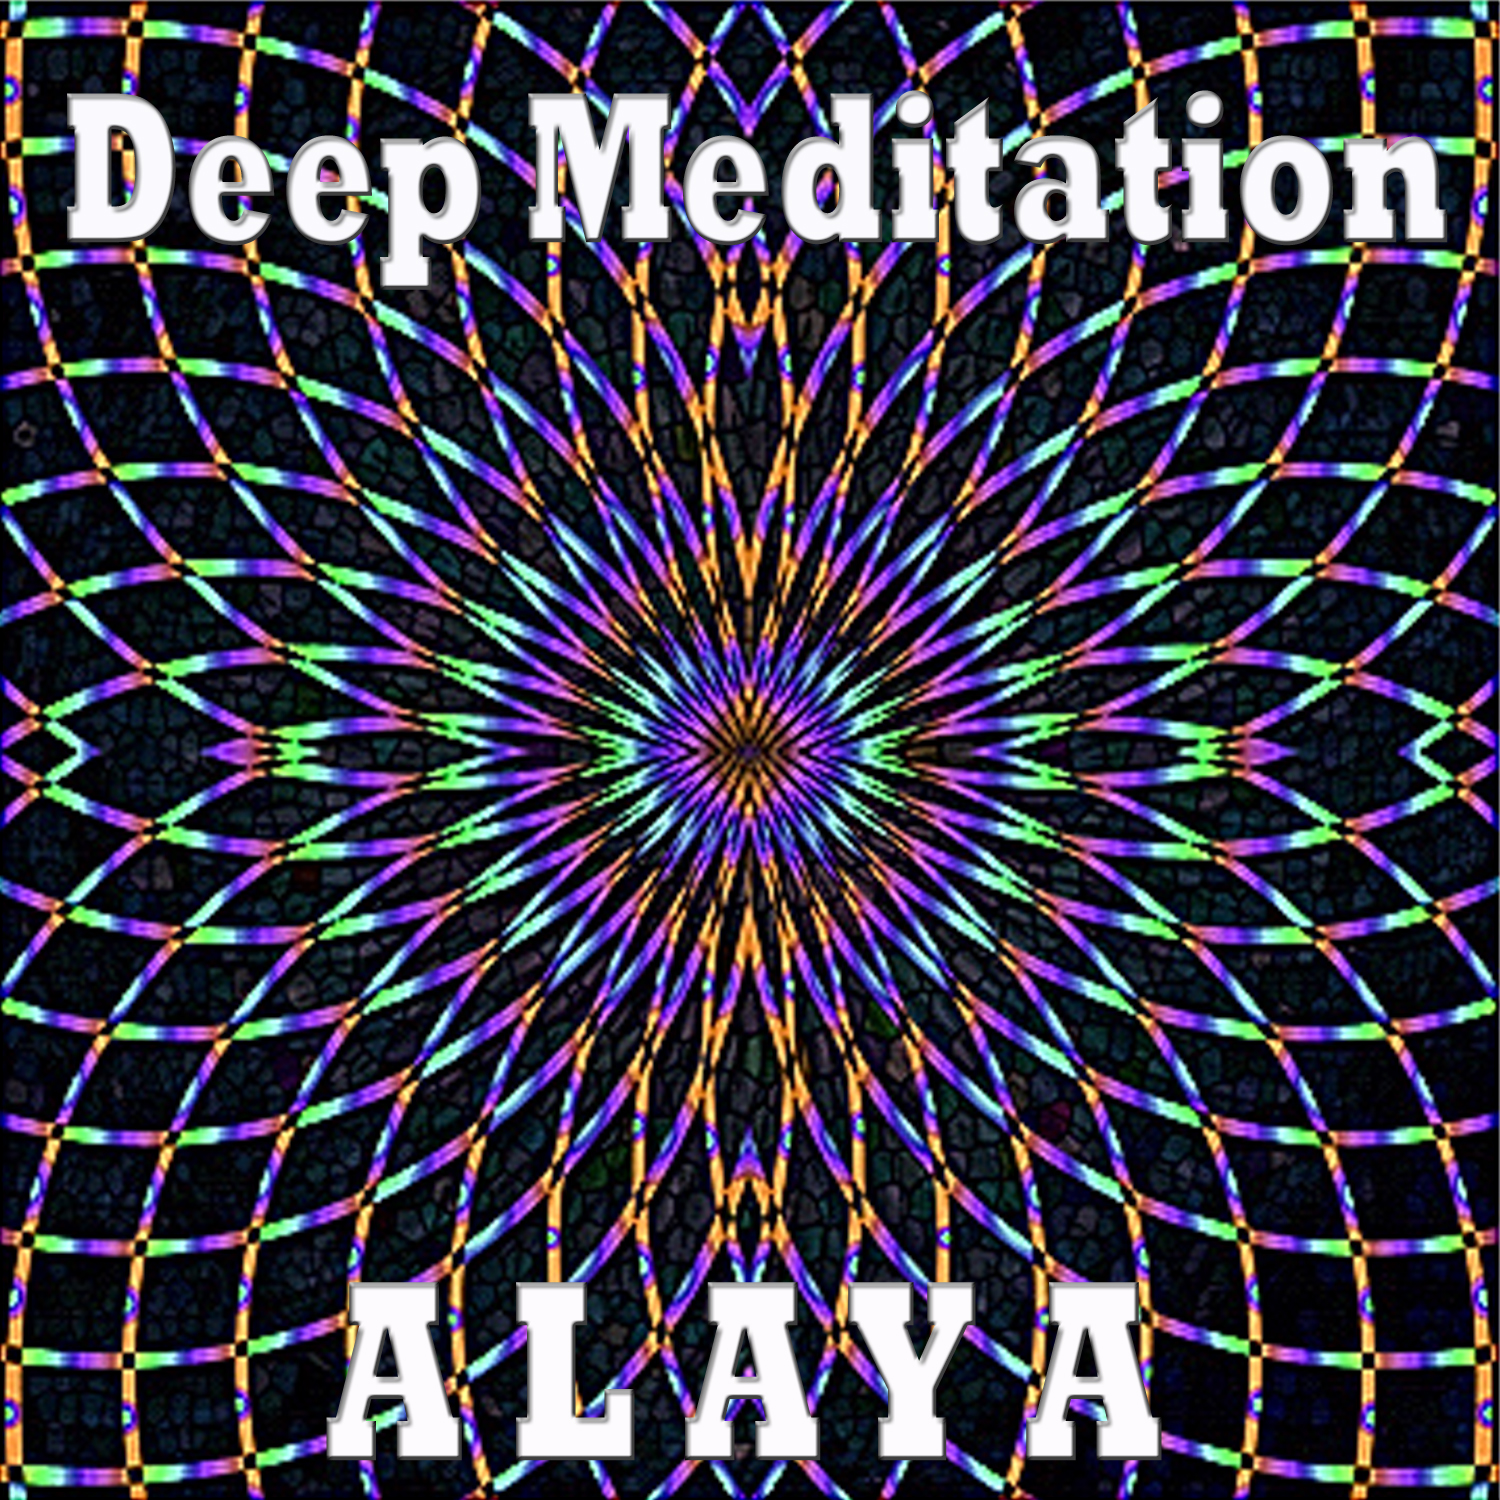 Deep meditation. Deep mention.